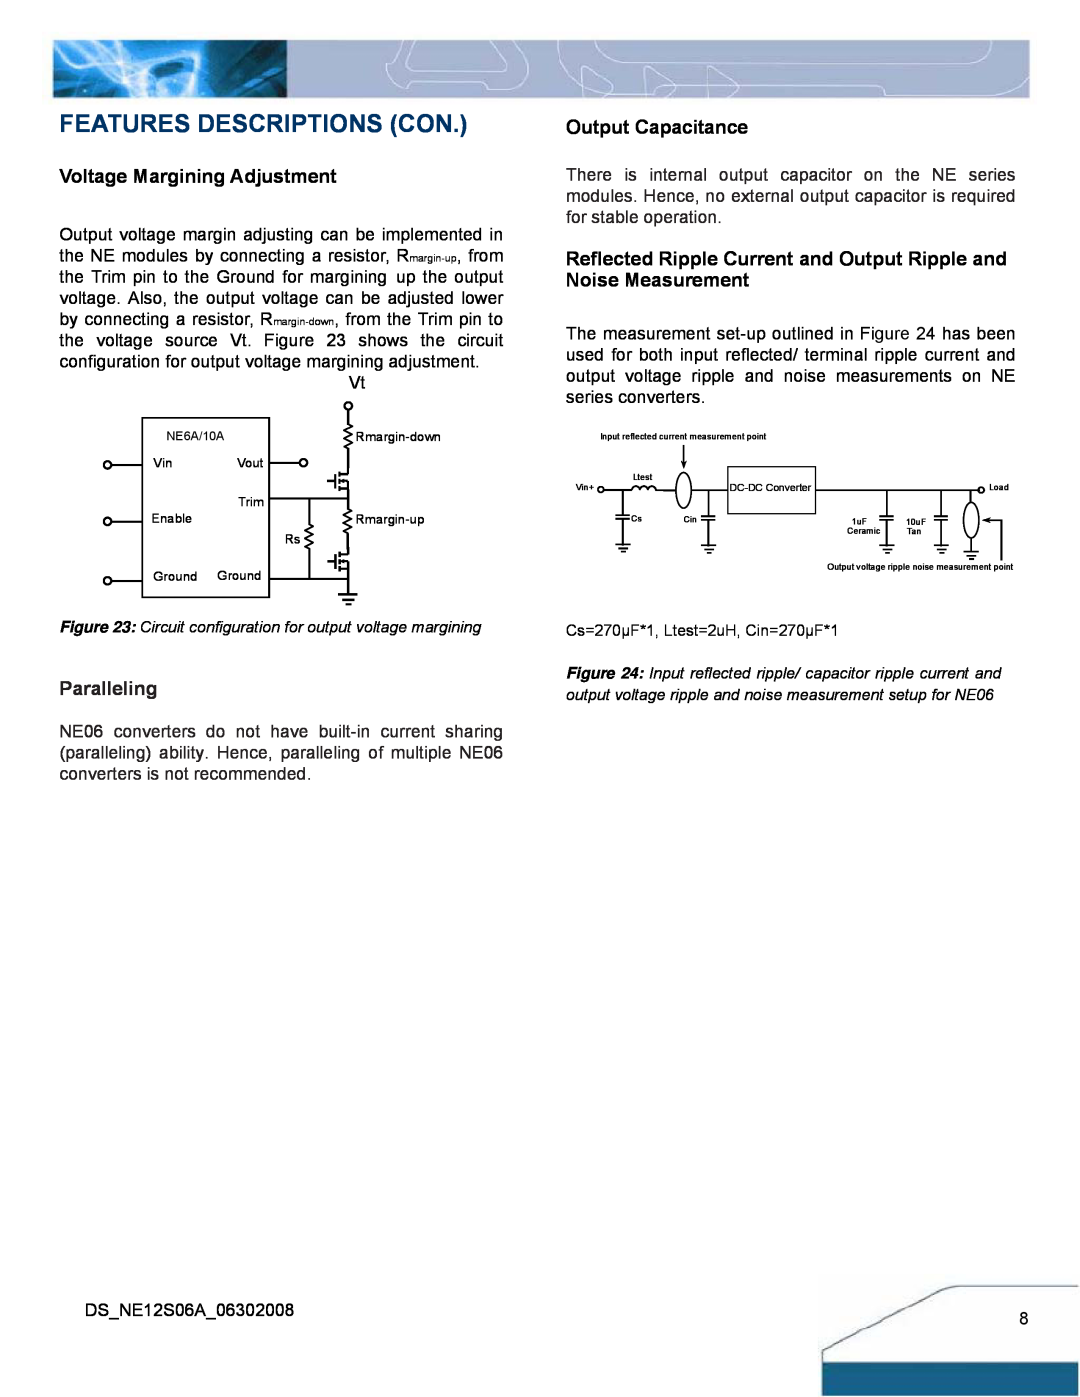 Delta Electronics 6A Series manual Voltage Margining Adjustment, Output Capacitance, Features Descriptions Con, Paralleling 